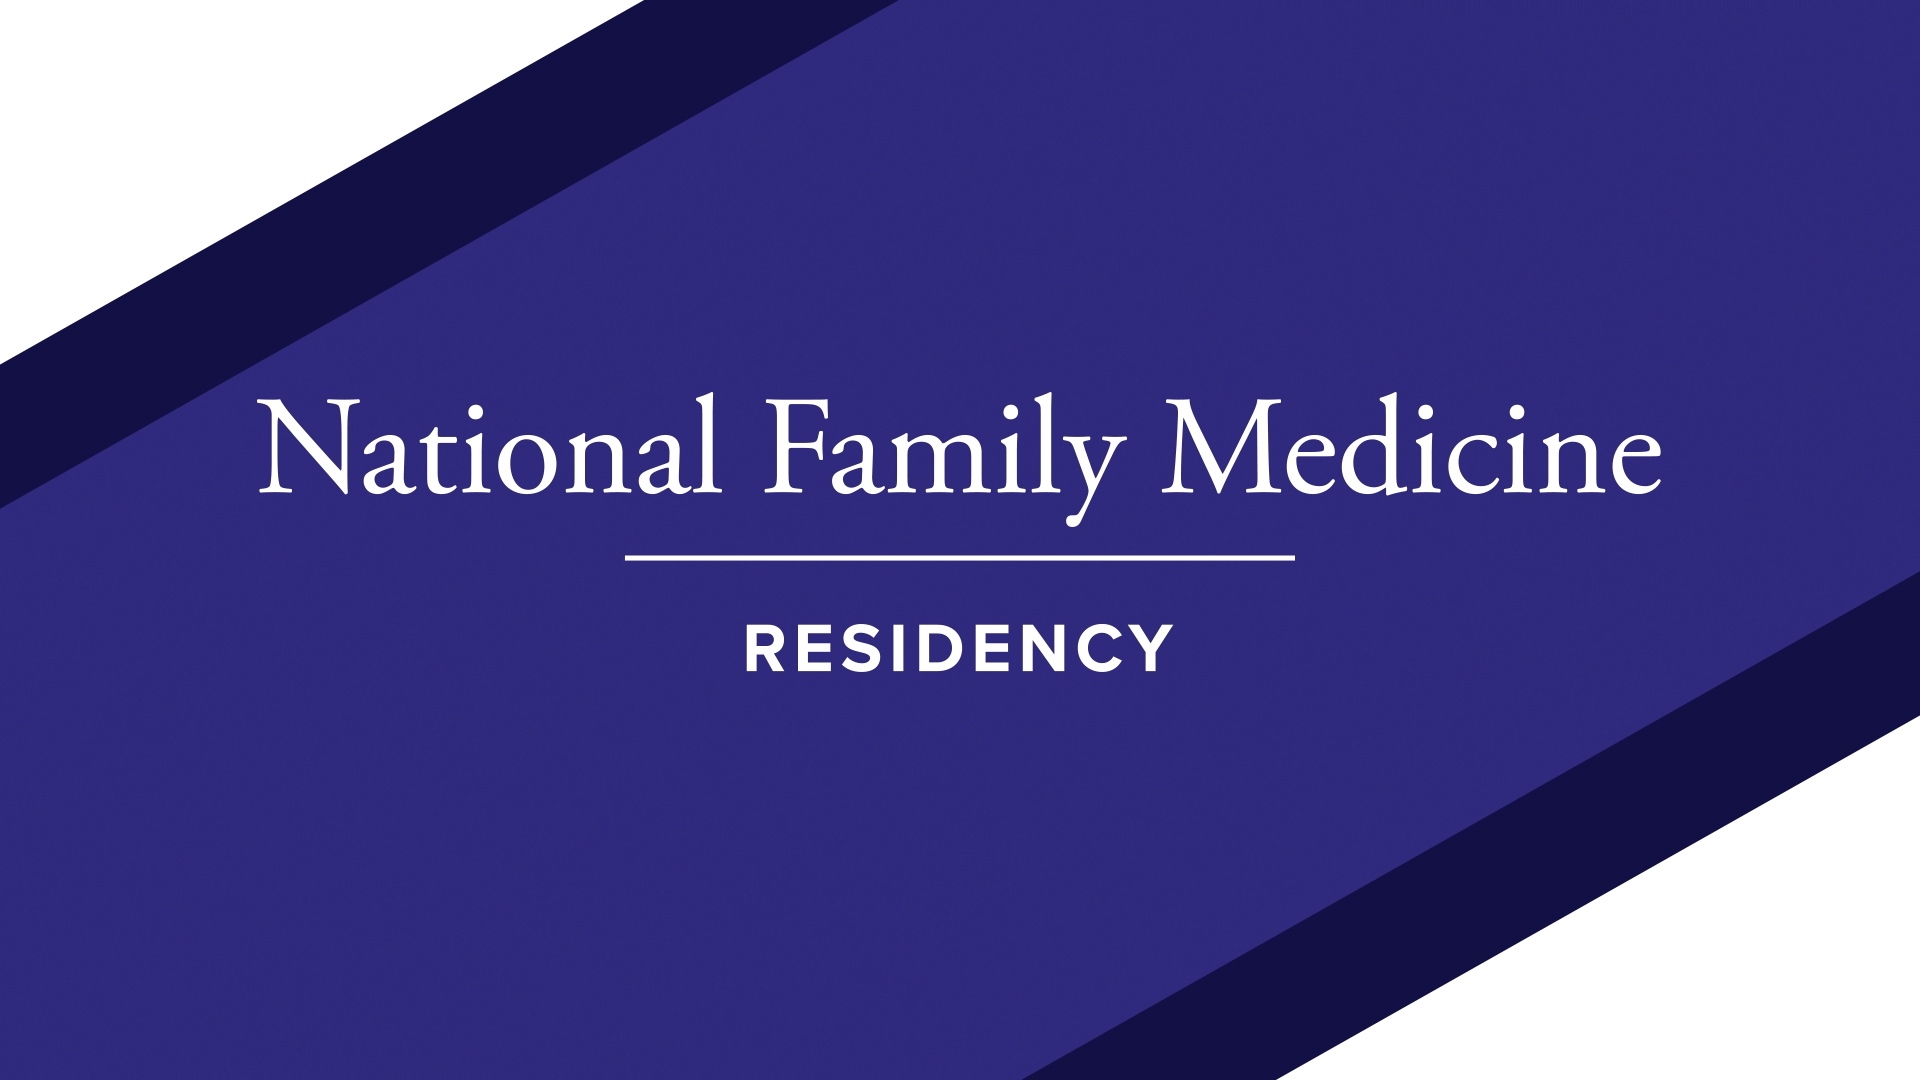 Regional Family Medicine